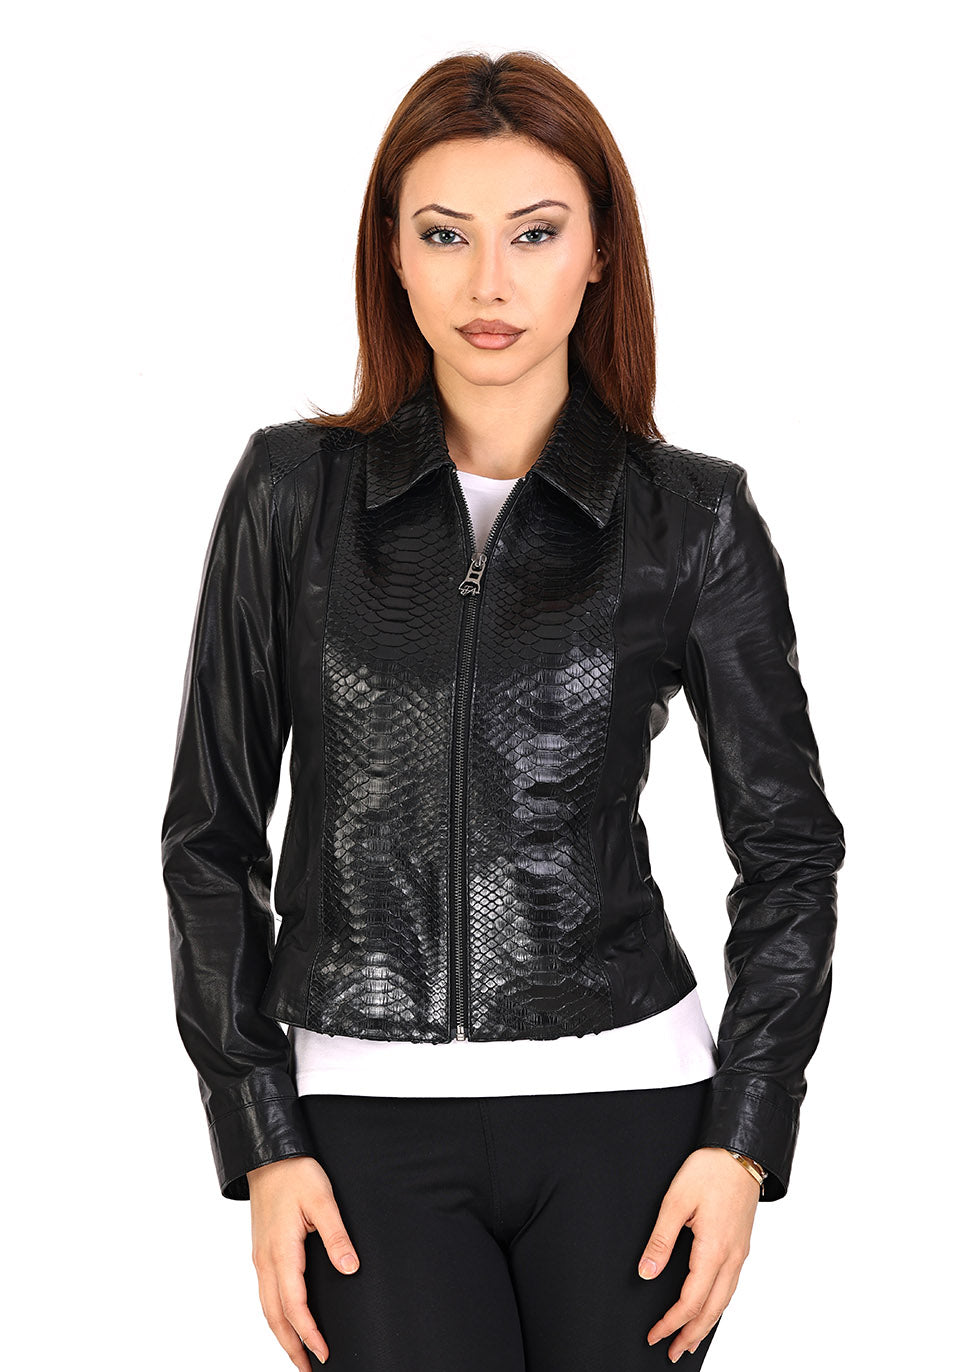 The Proctor  Pyhtn  Black Leather Women Jacket